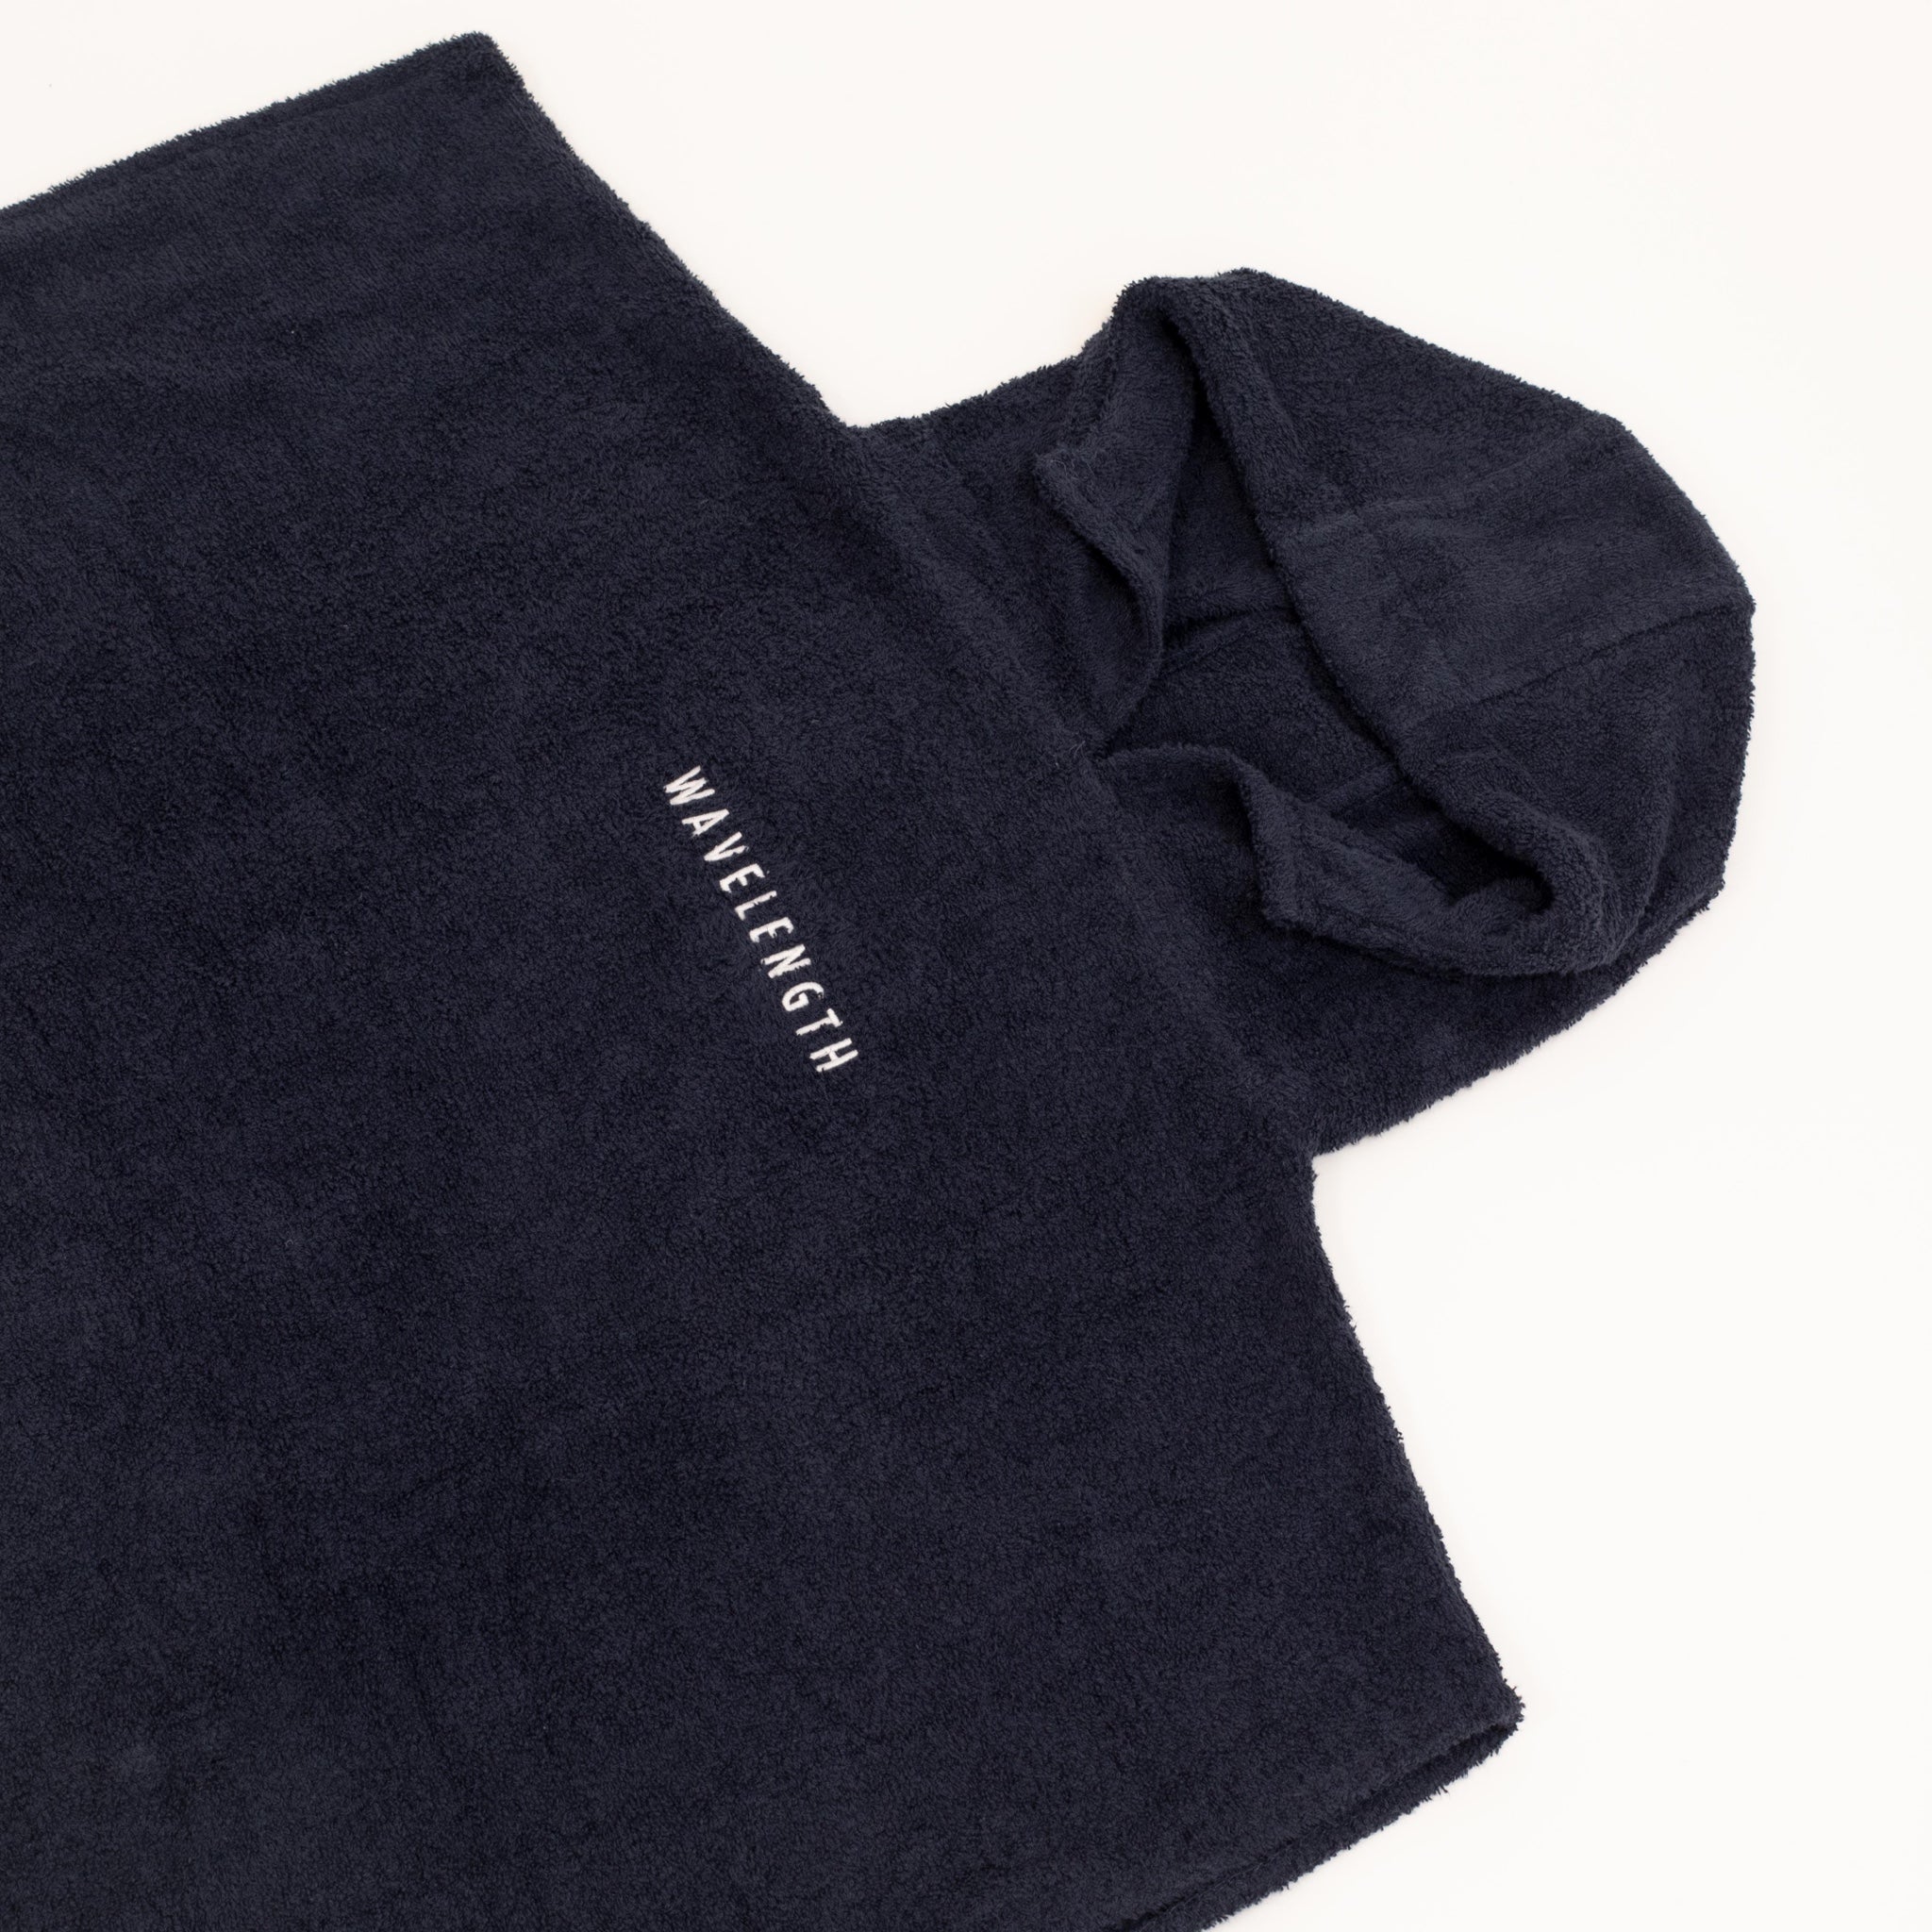 Wavelength Embroidered Change Towel - Navy